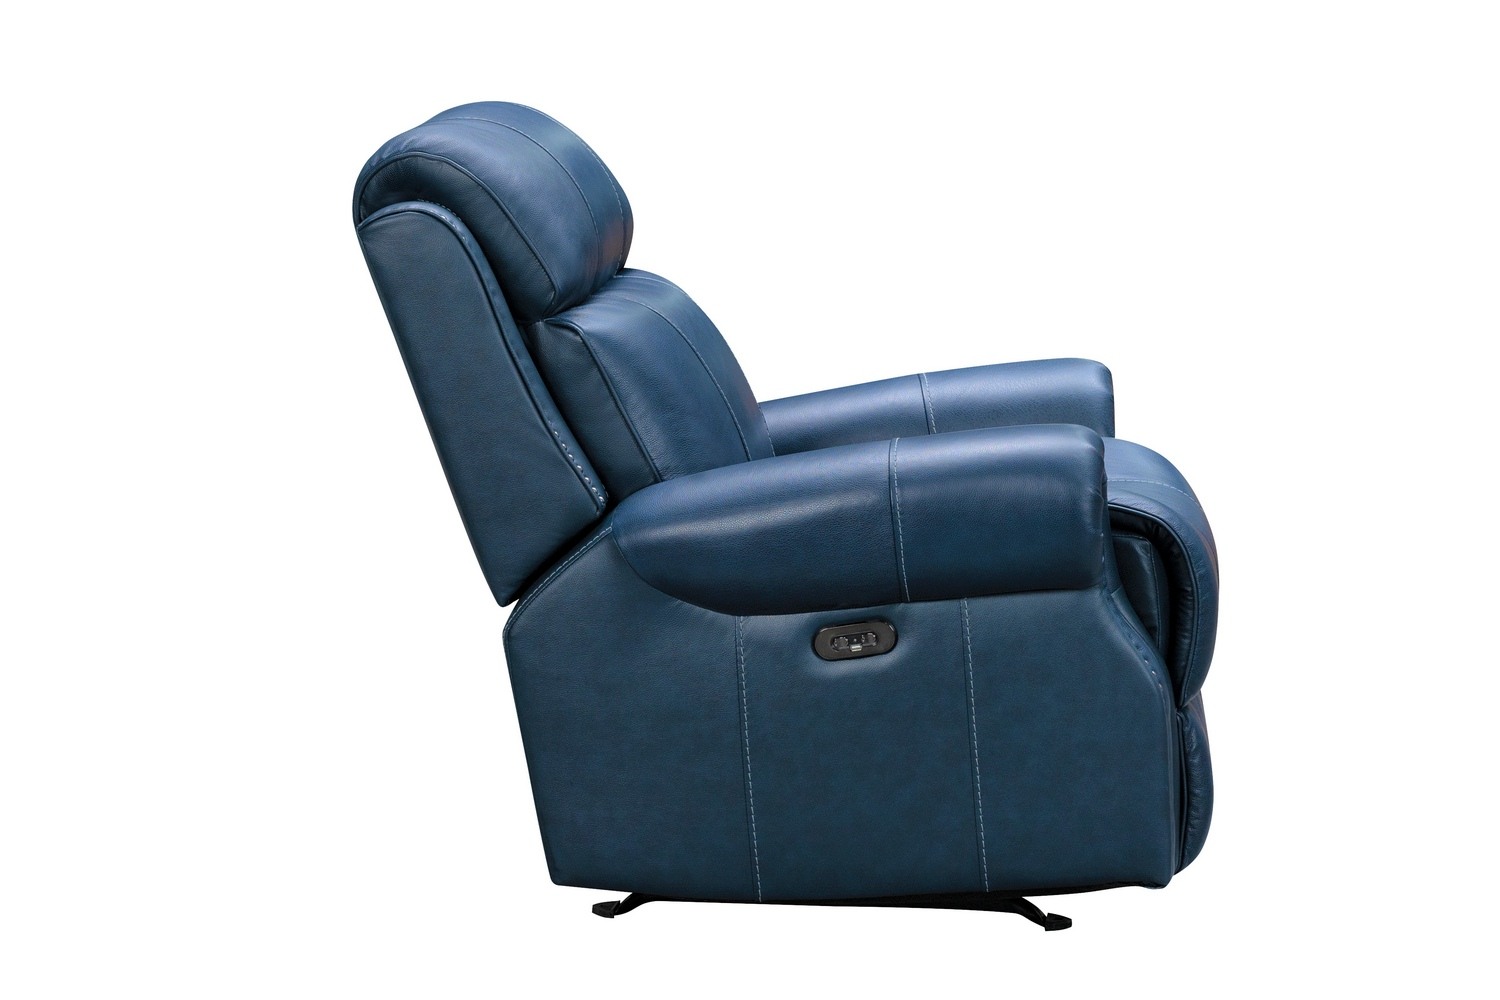 Barcalounger Demara Rocker Recliner Chair with Power and Power Head Rest - Marco Navy Blue/Leather match